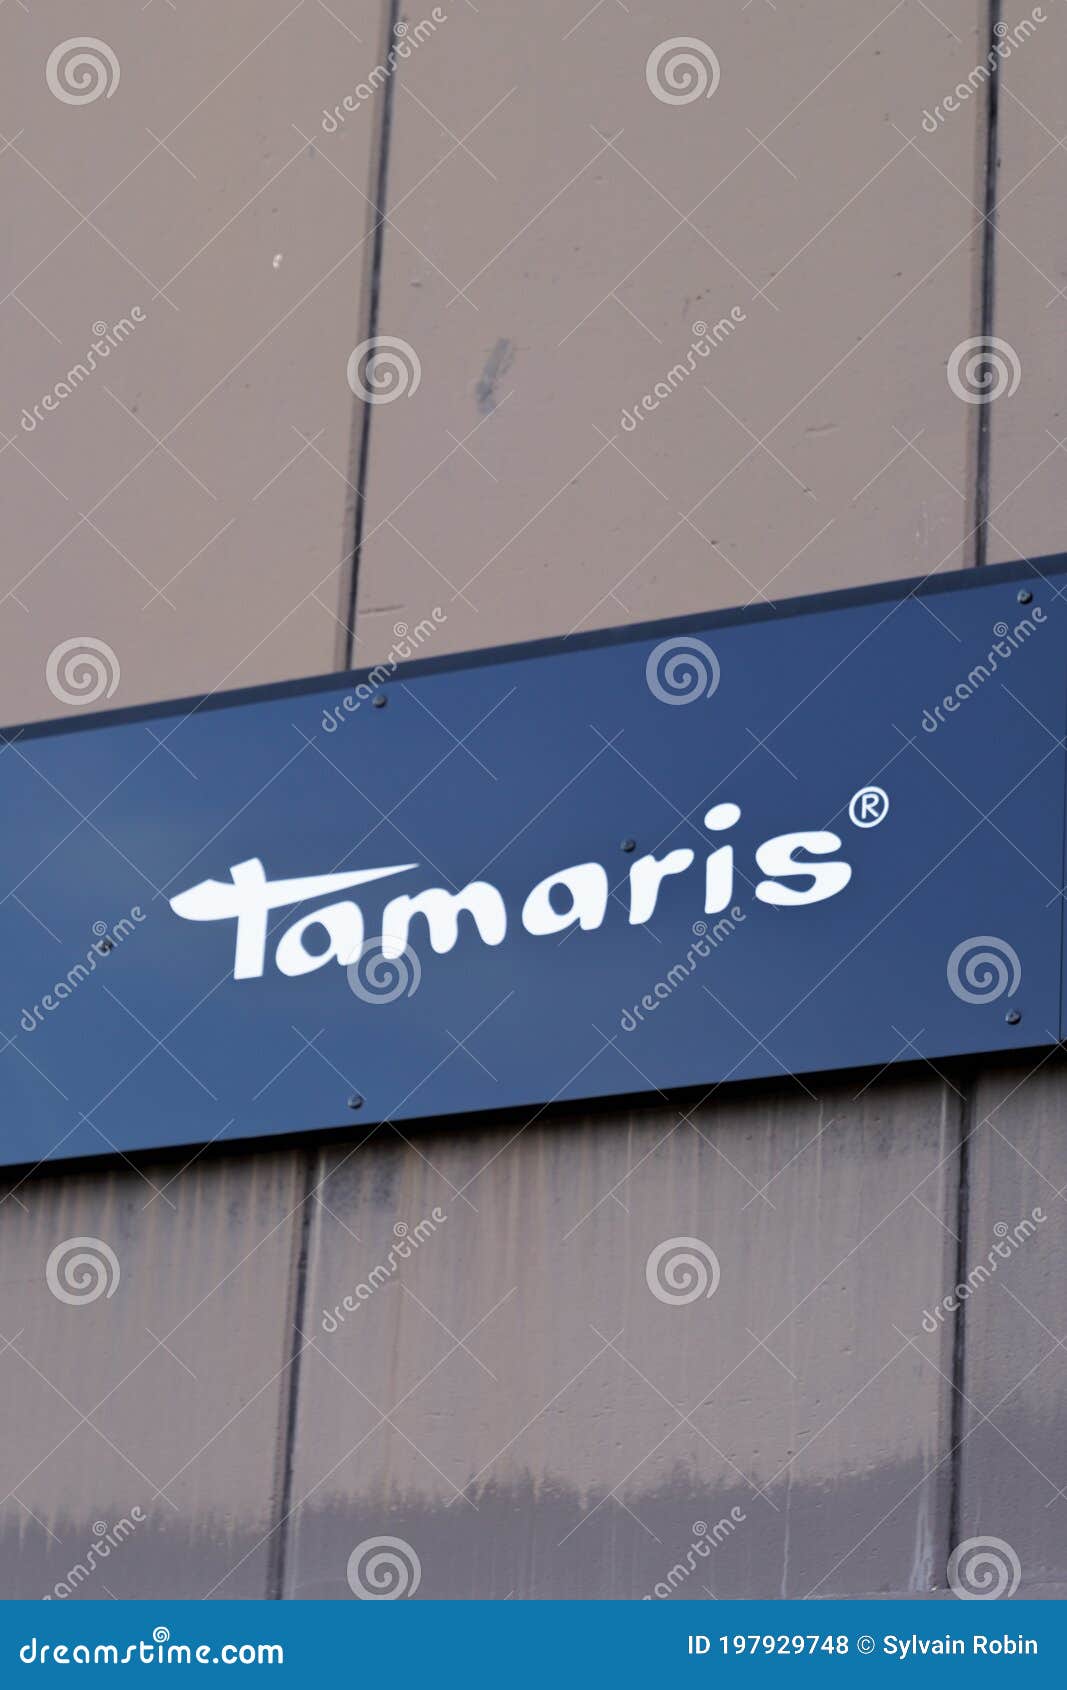 tamaris shoes germany